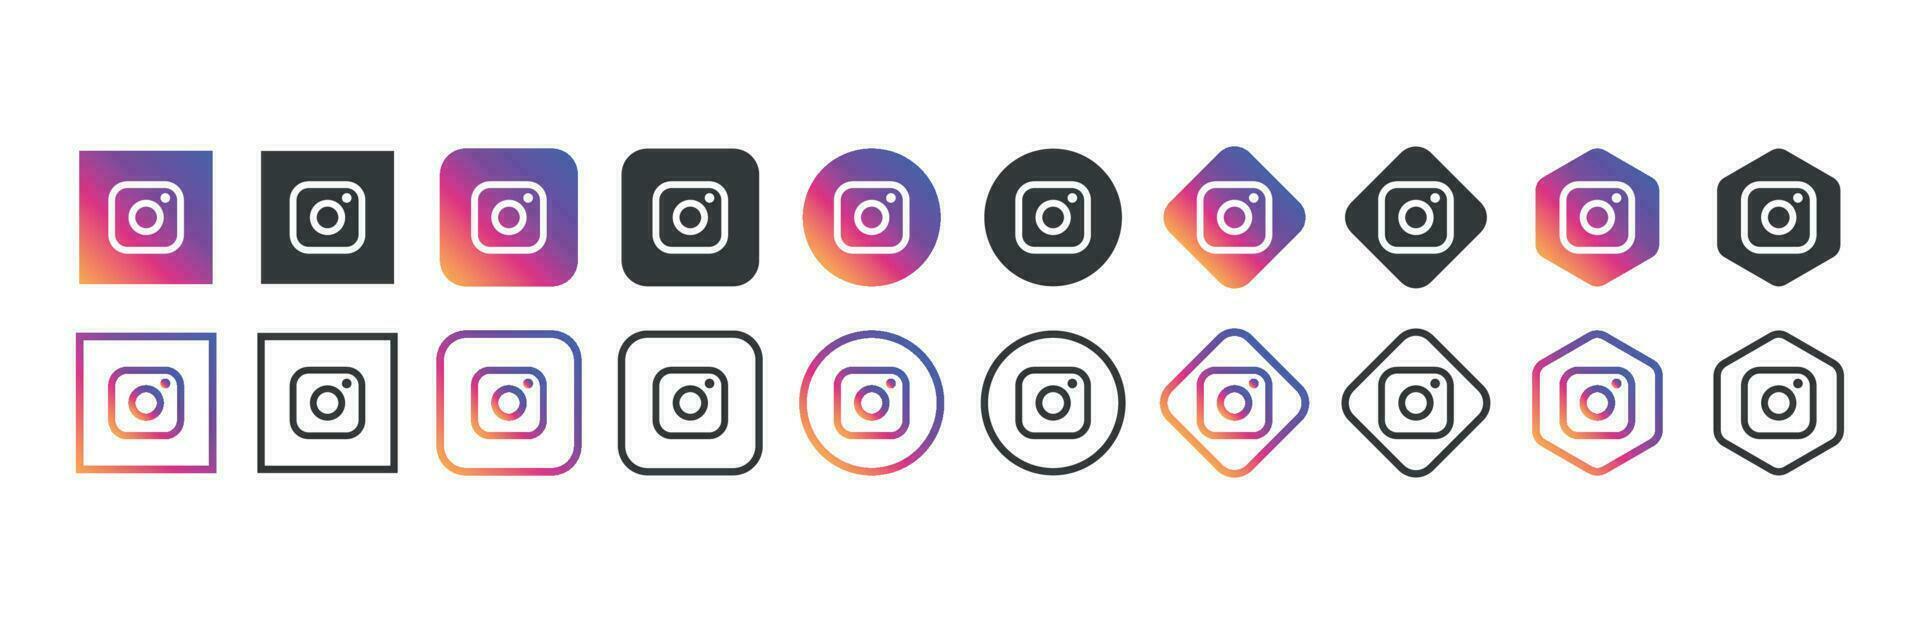 Instagram logo icon in various forms, social media icon vector